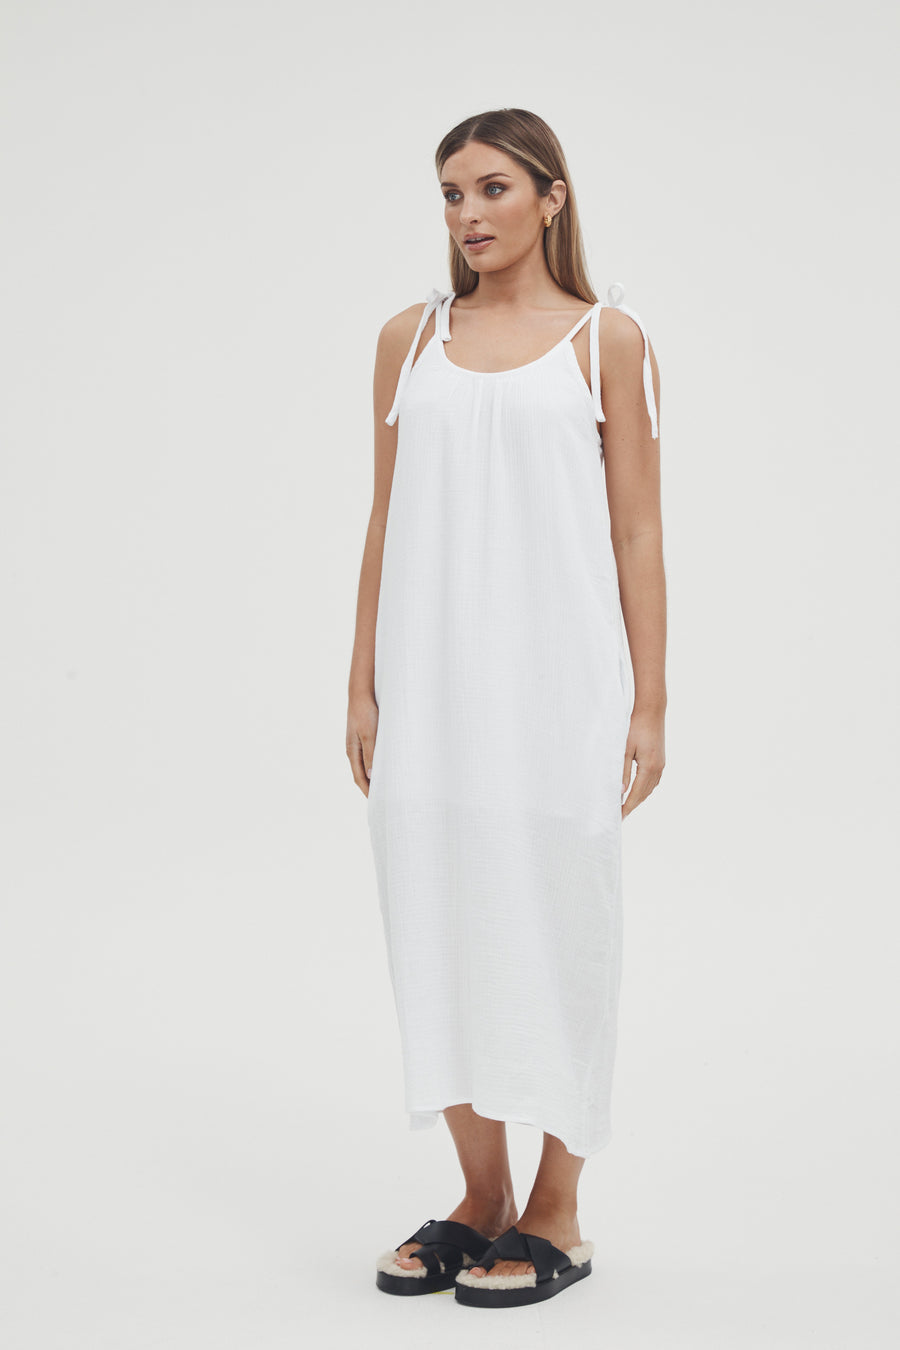 Babyshower Dress (White) 11